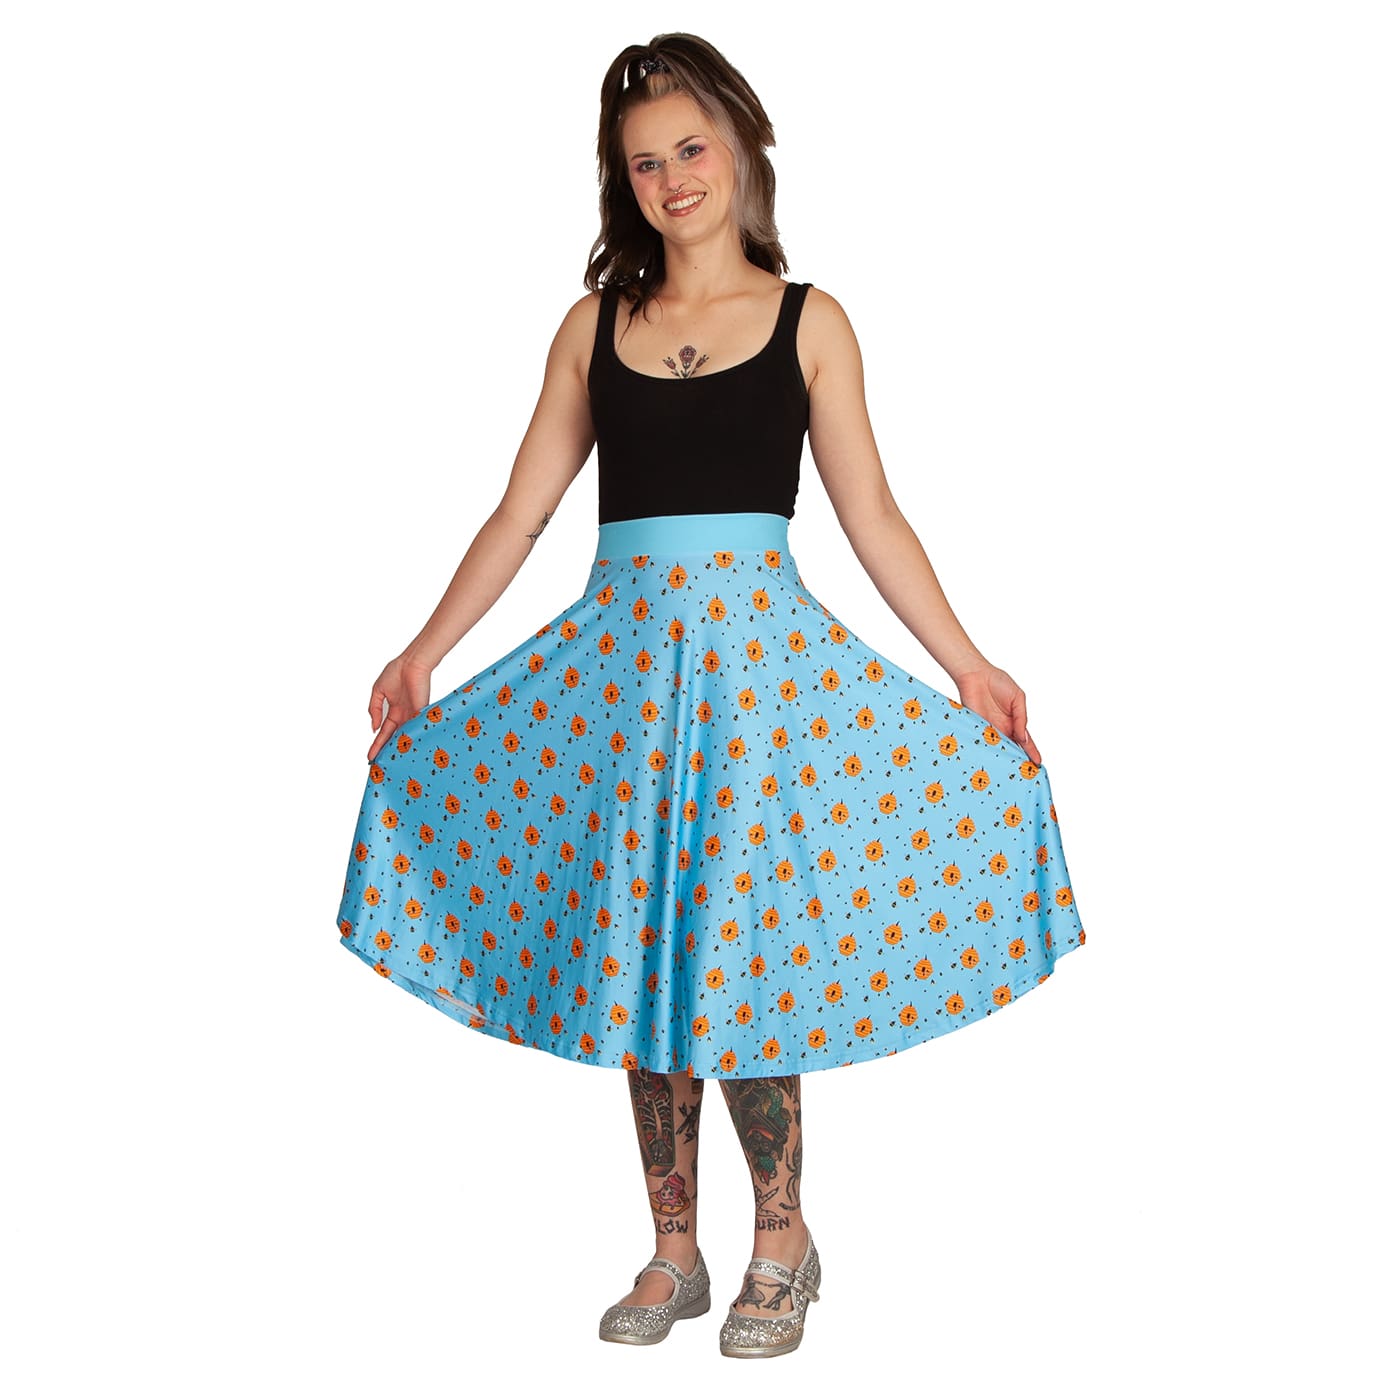 Hive Swishy Skirt by RainbowsAndFairies.com.au (Bees - Beehive - Animal Print - Queen Bee - Circle Skirt With Pockets - Mod Retro - Rockabilly) - SKU: CL_SWISH_BHIVE_ORG - Pic-07